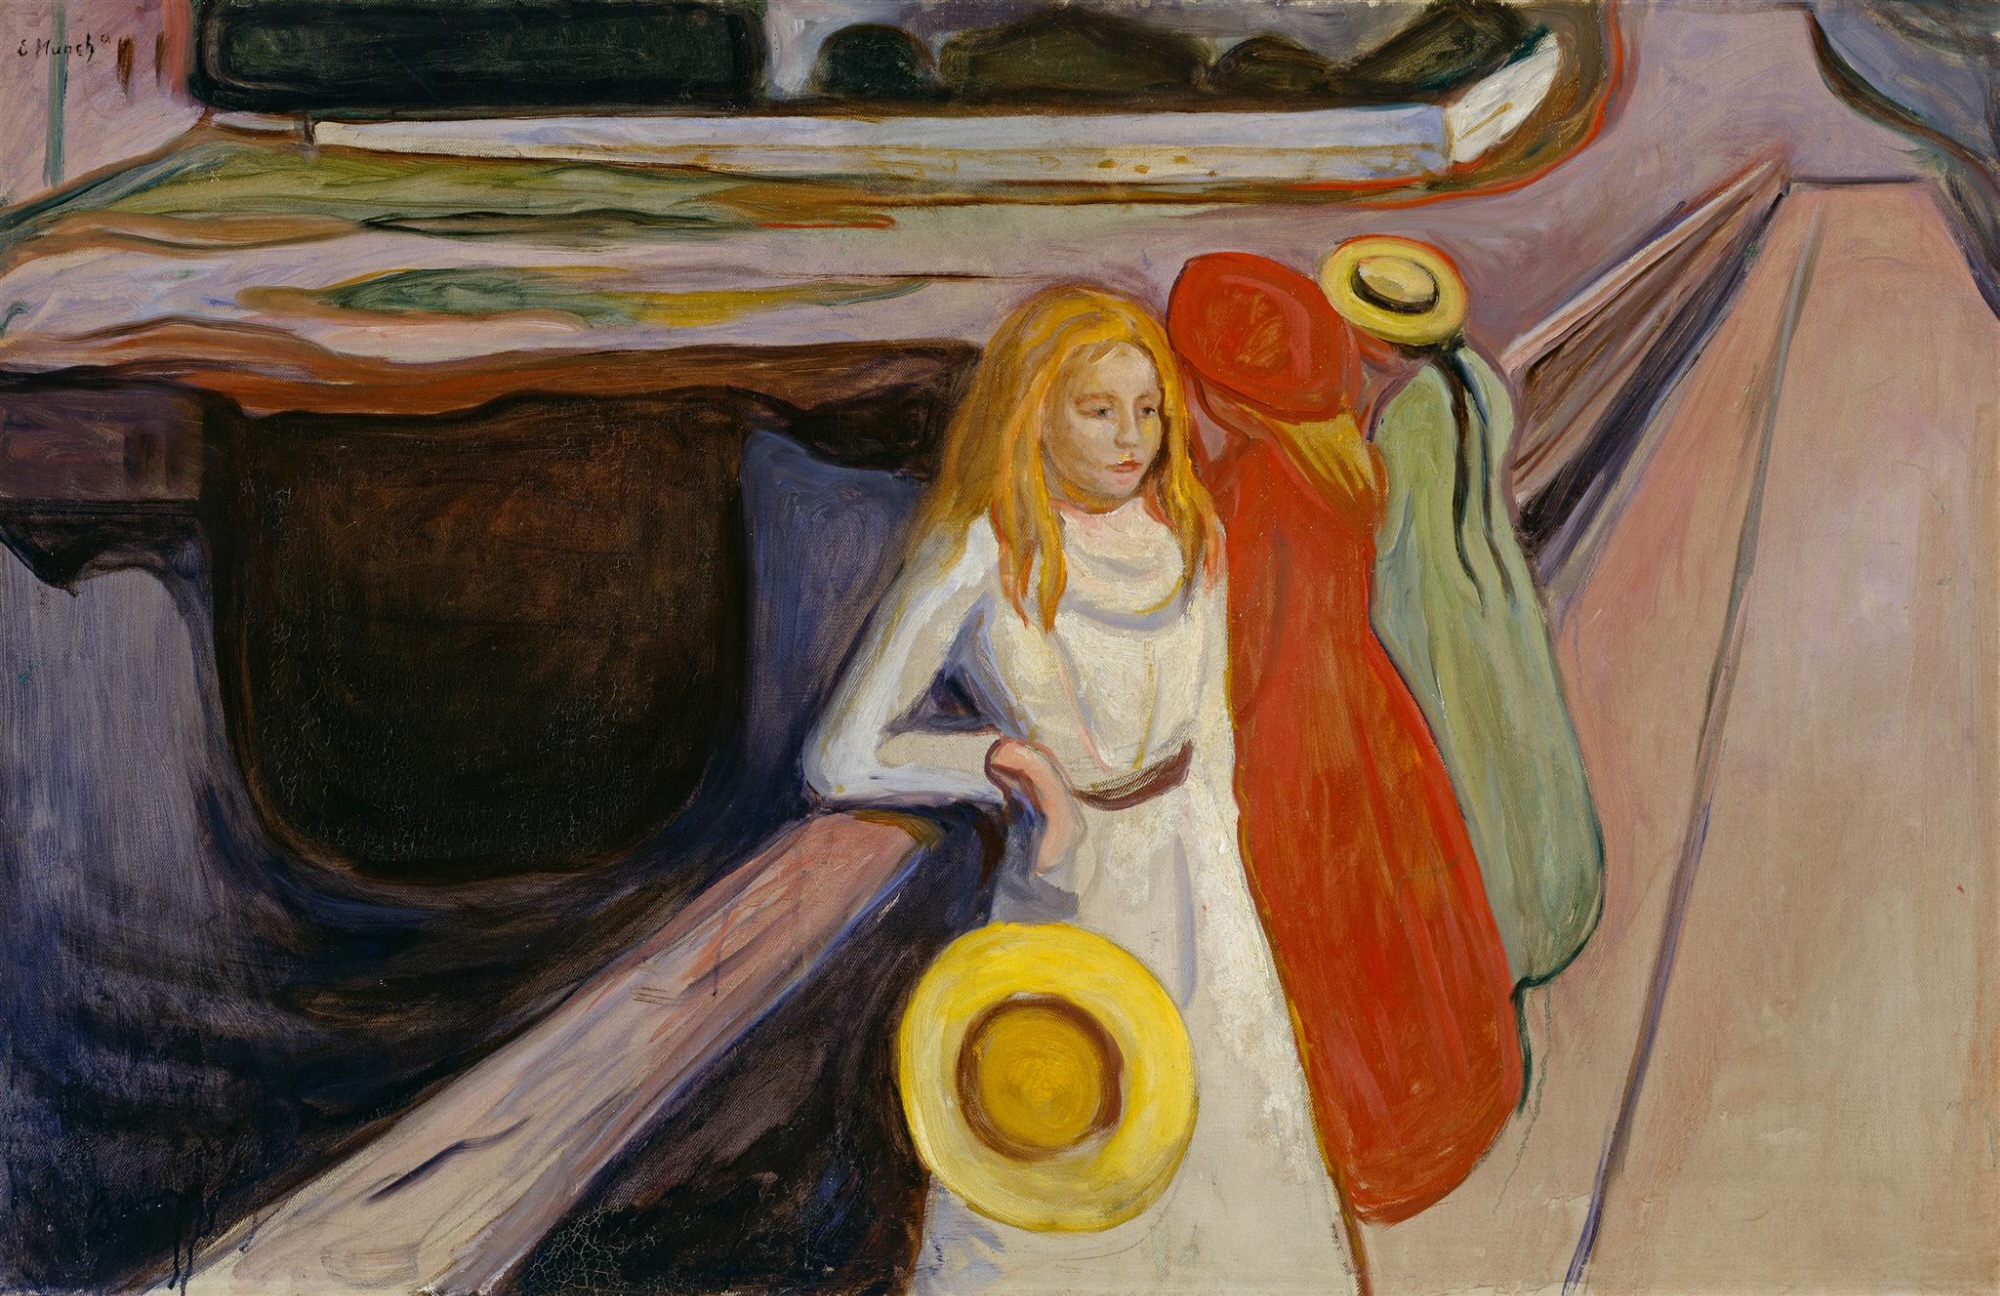 Дівчата на мосту by Edvard Munch - 1901 - 83.8 x 129.6 см 